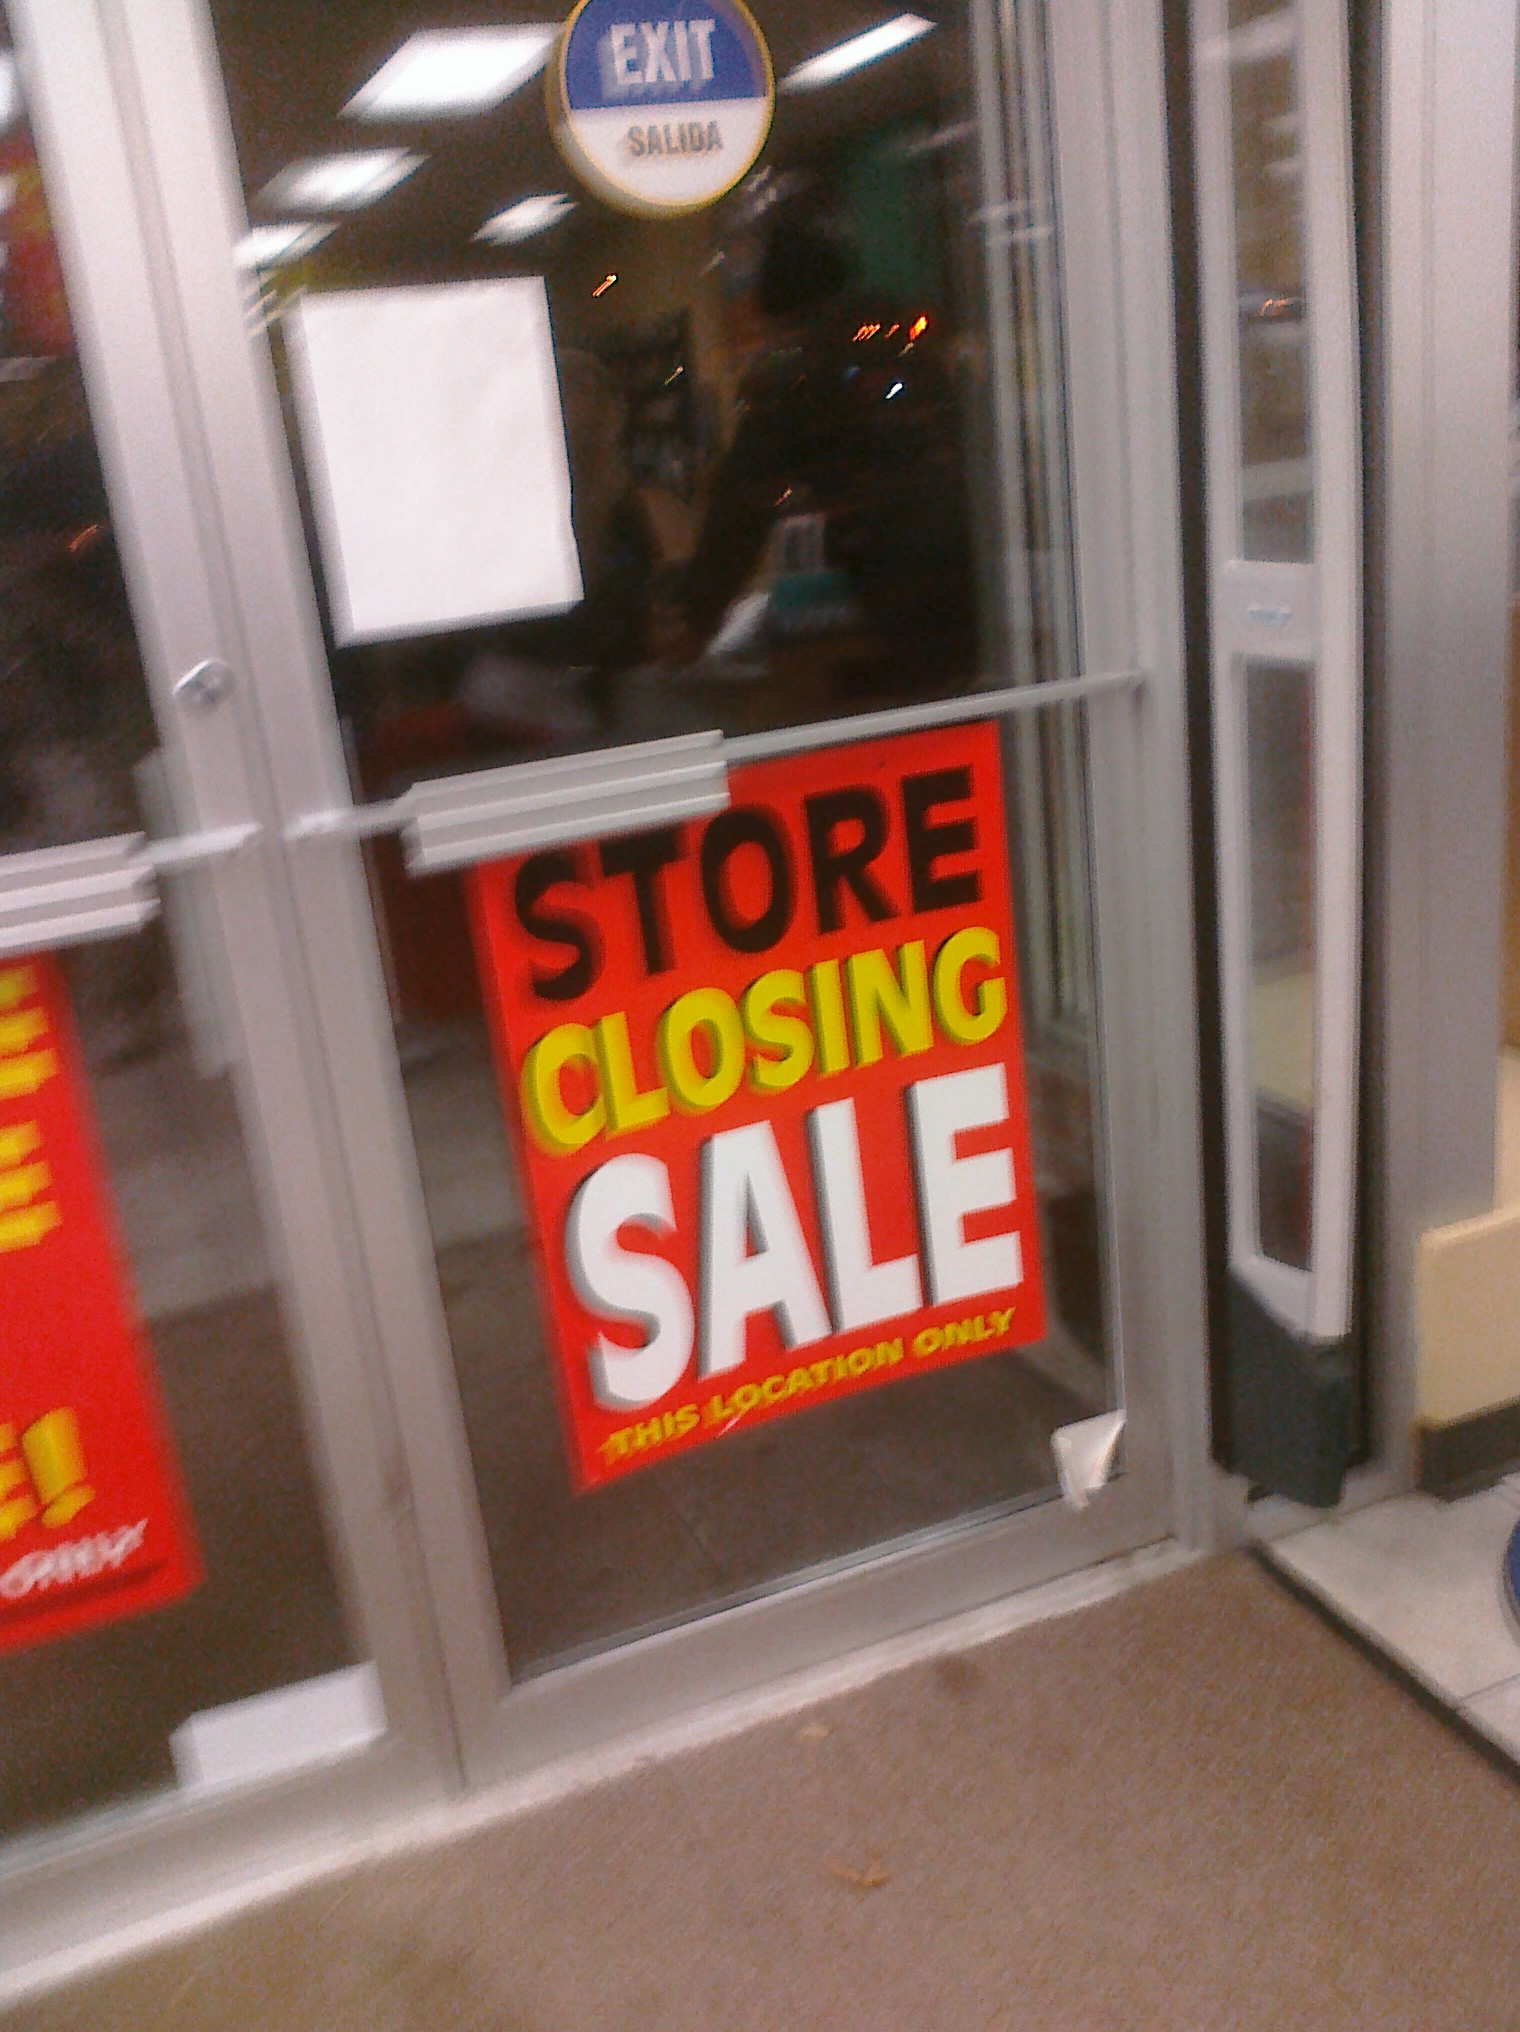 Store Closing